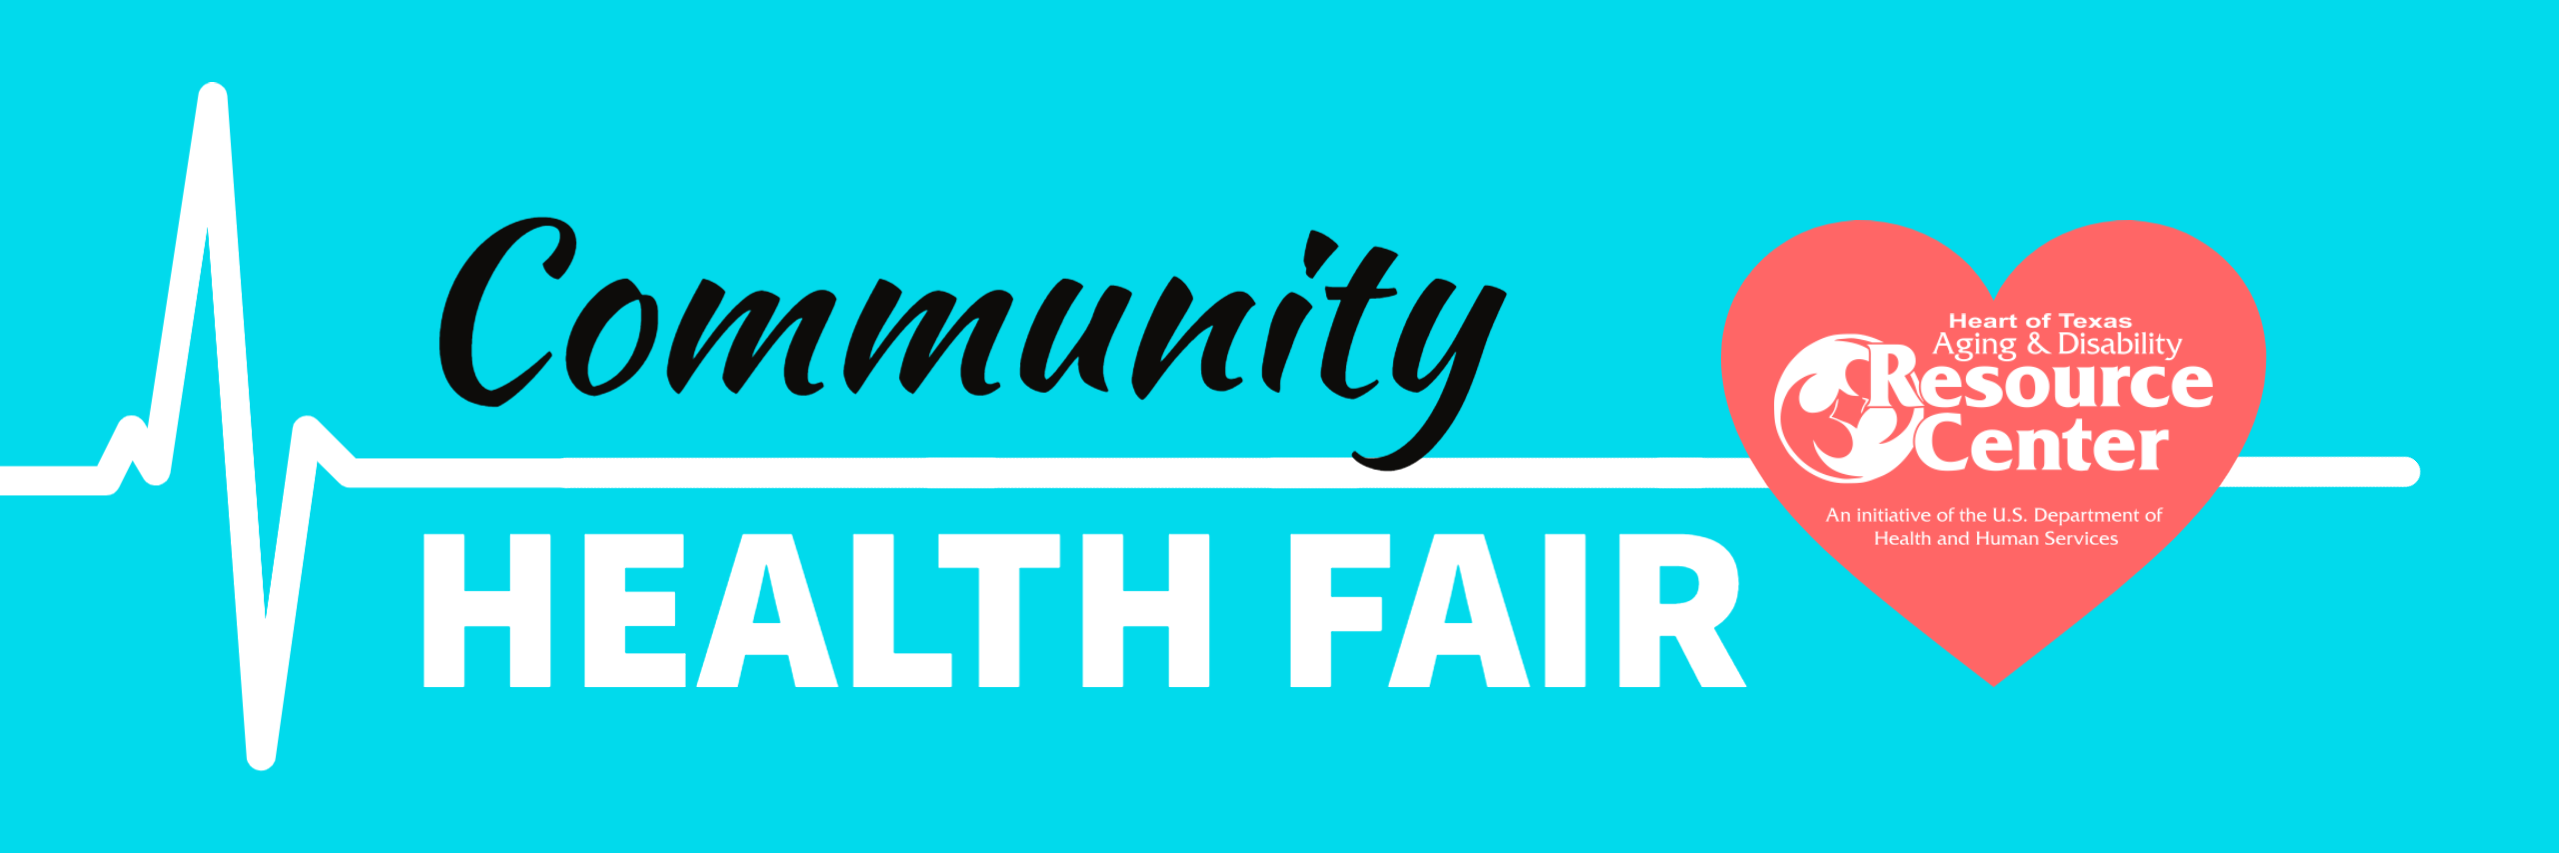 Community Health Fair Image